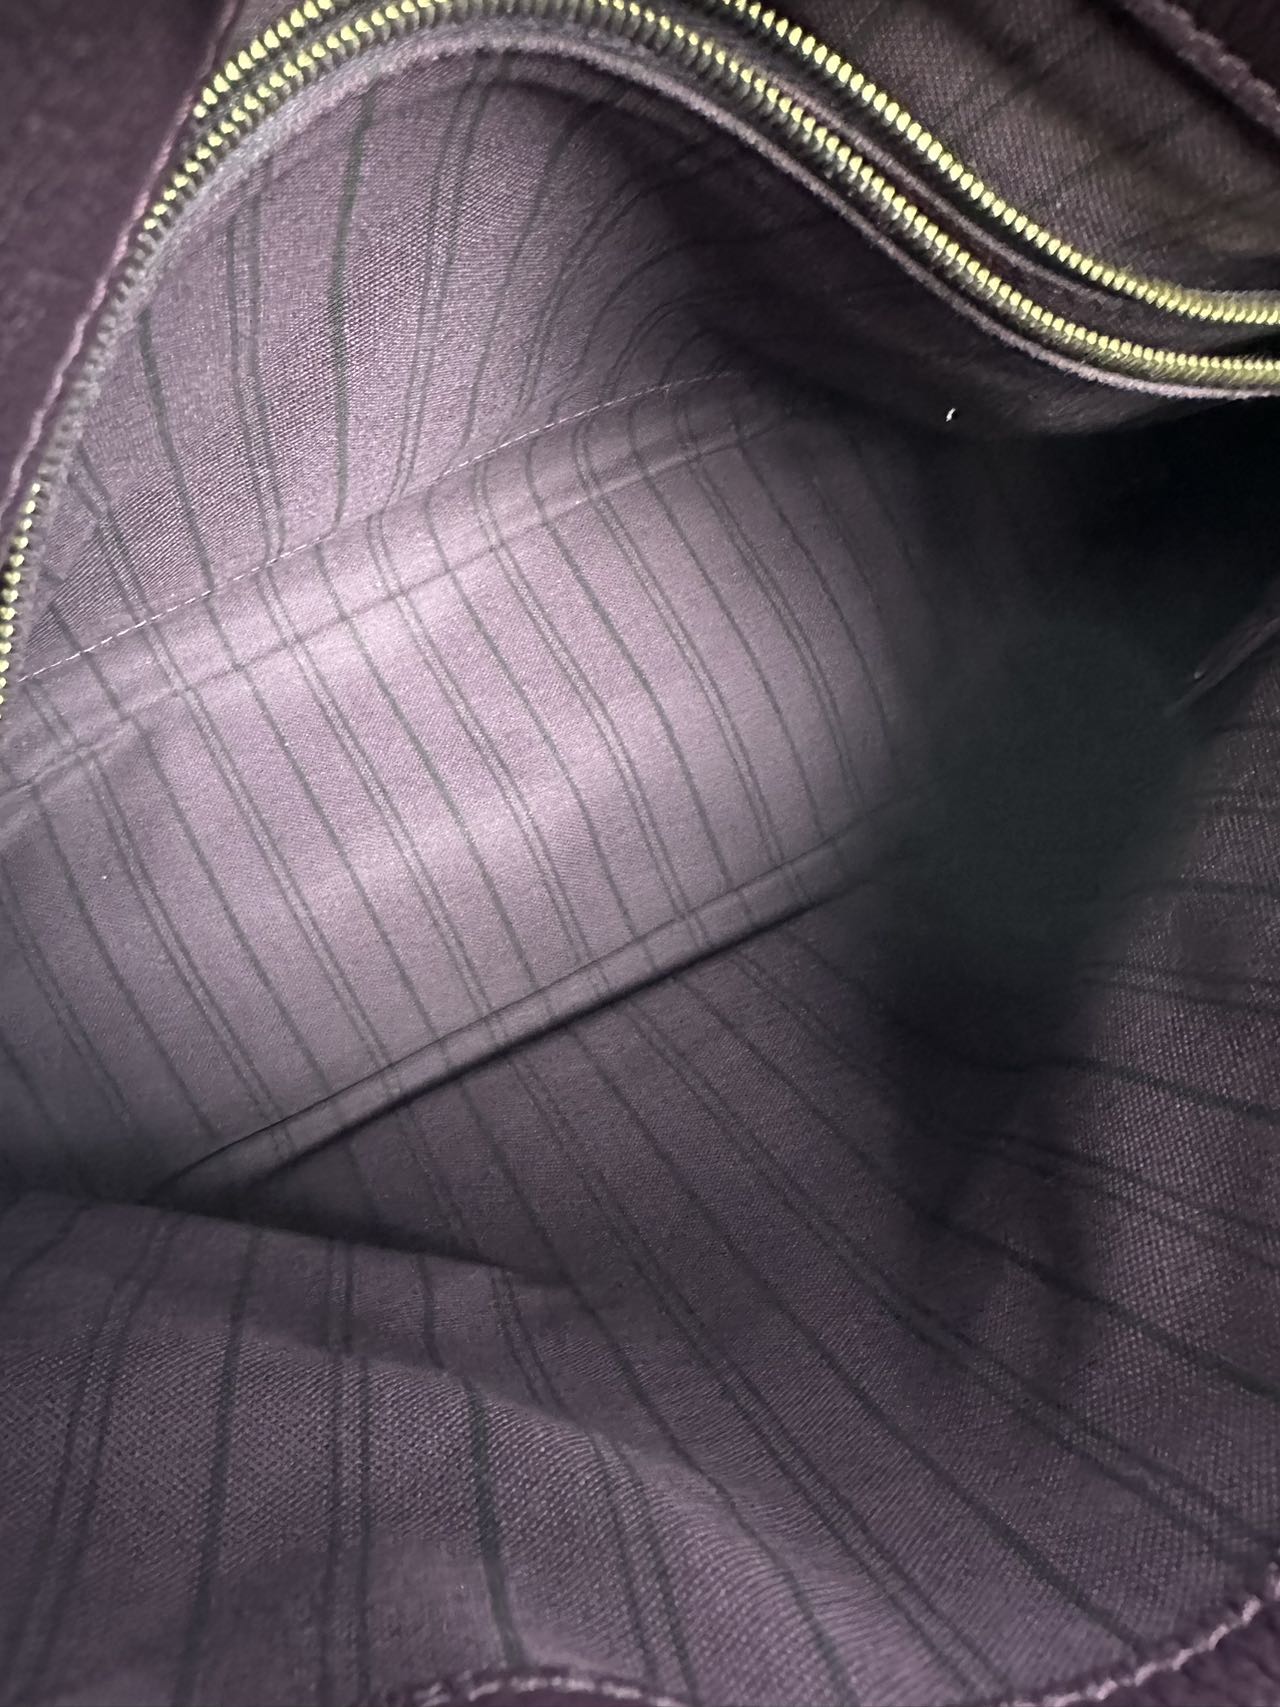 Preloved Louis Vuitton Audacieuse PM Shoulder Bag Totes